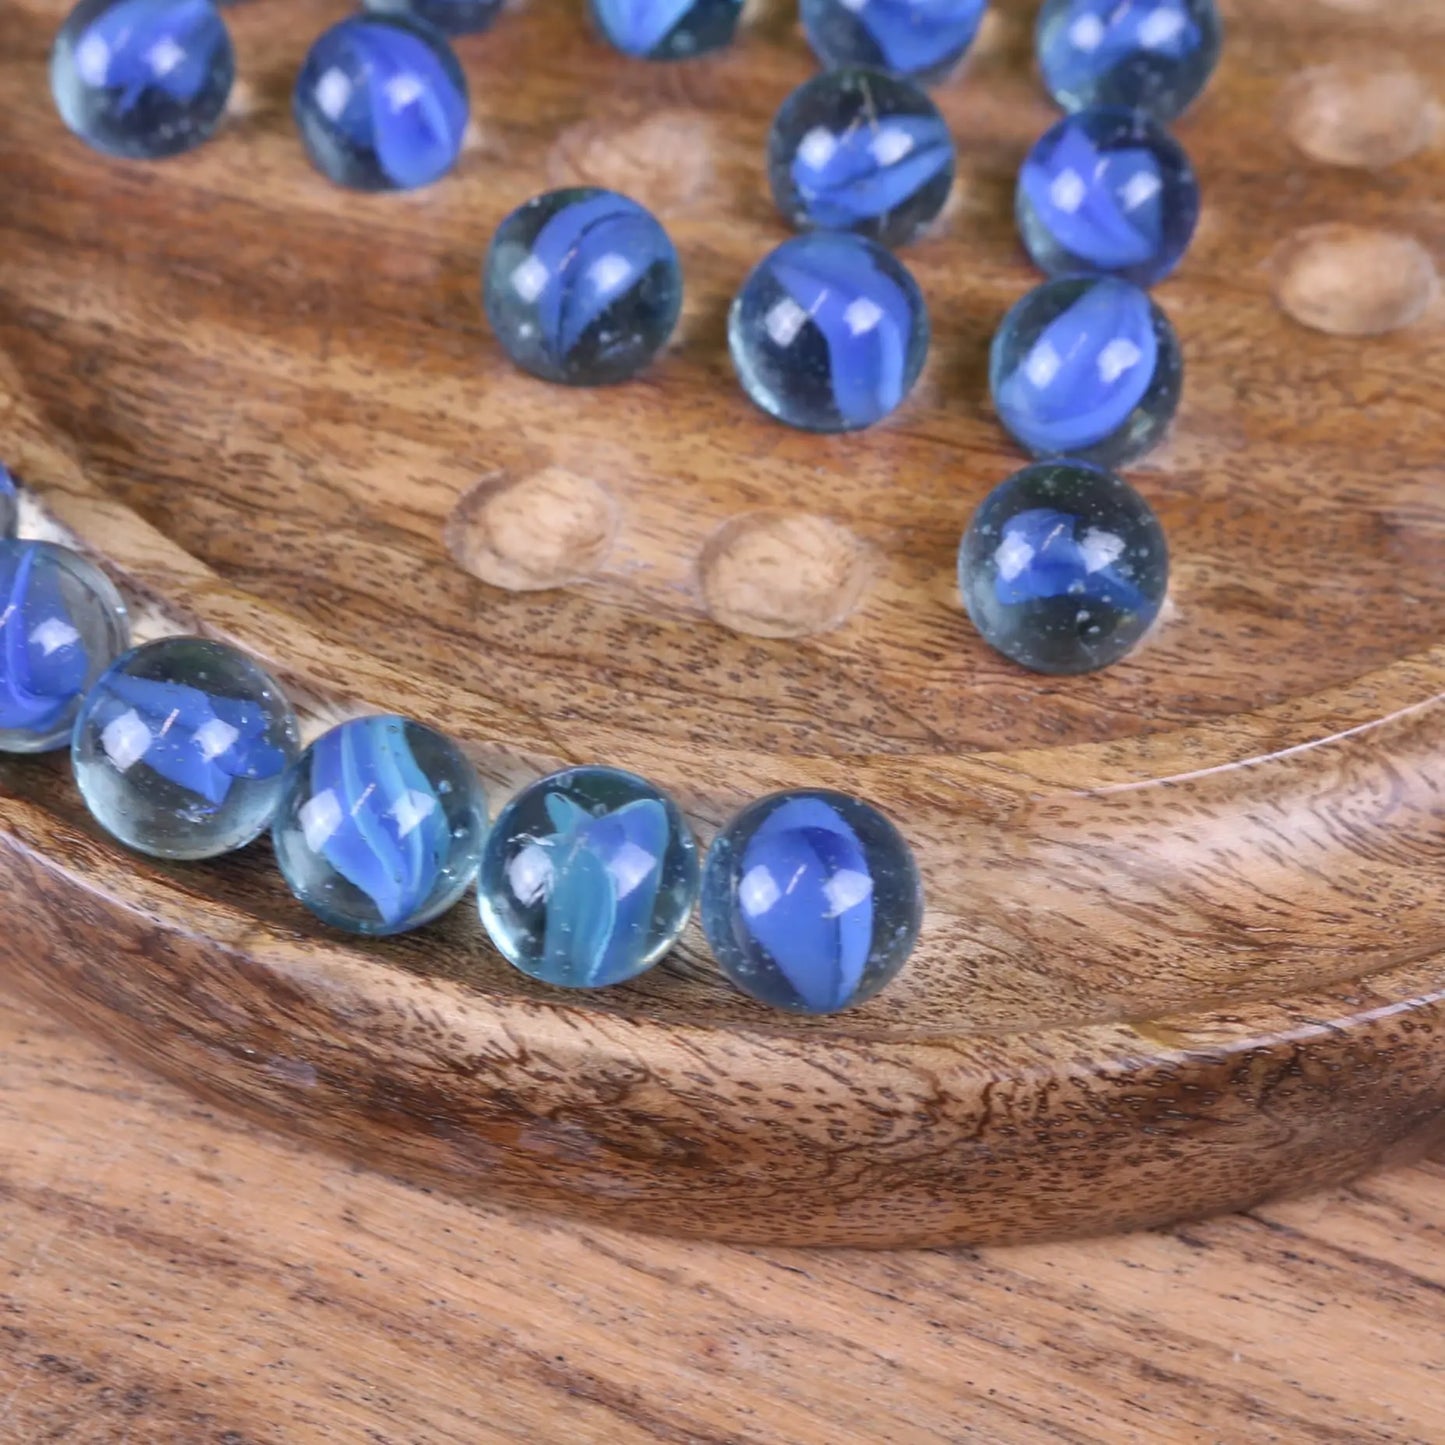 Moksha Deluxe Wooden Solitaire Set - Closeup of Marbles